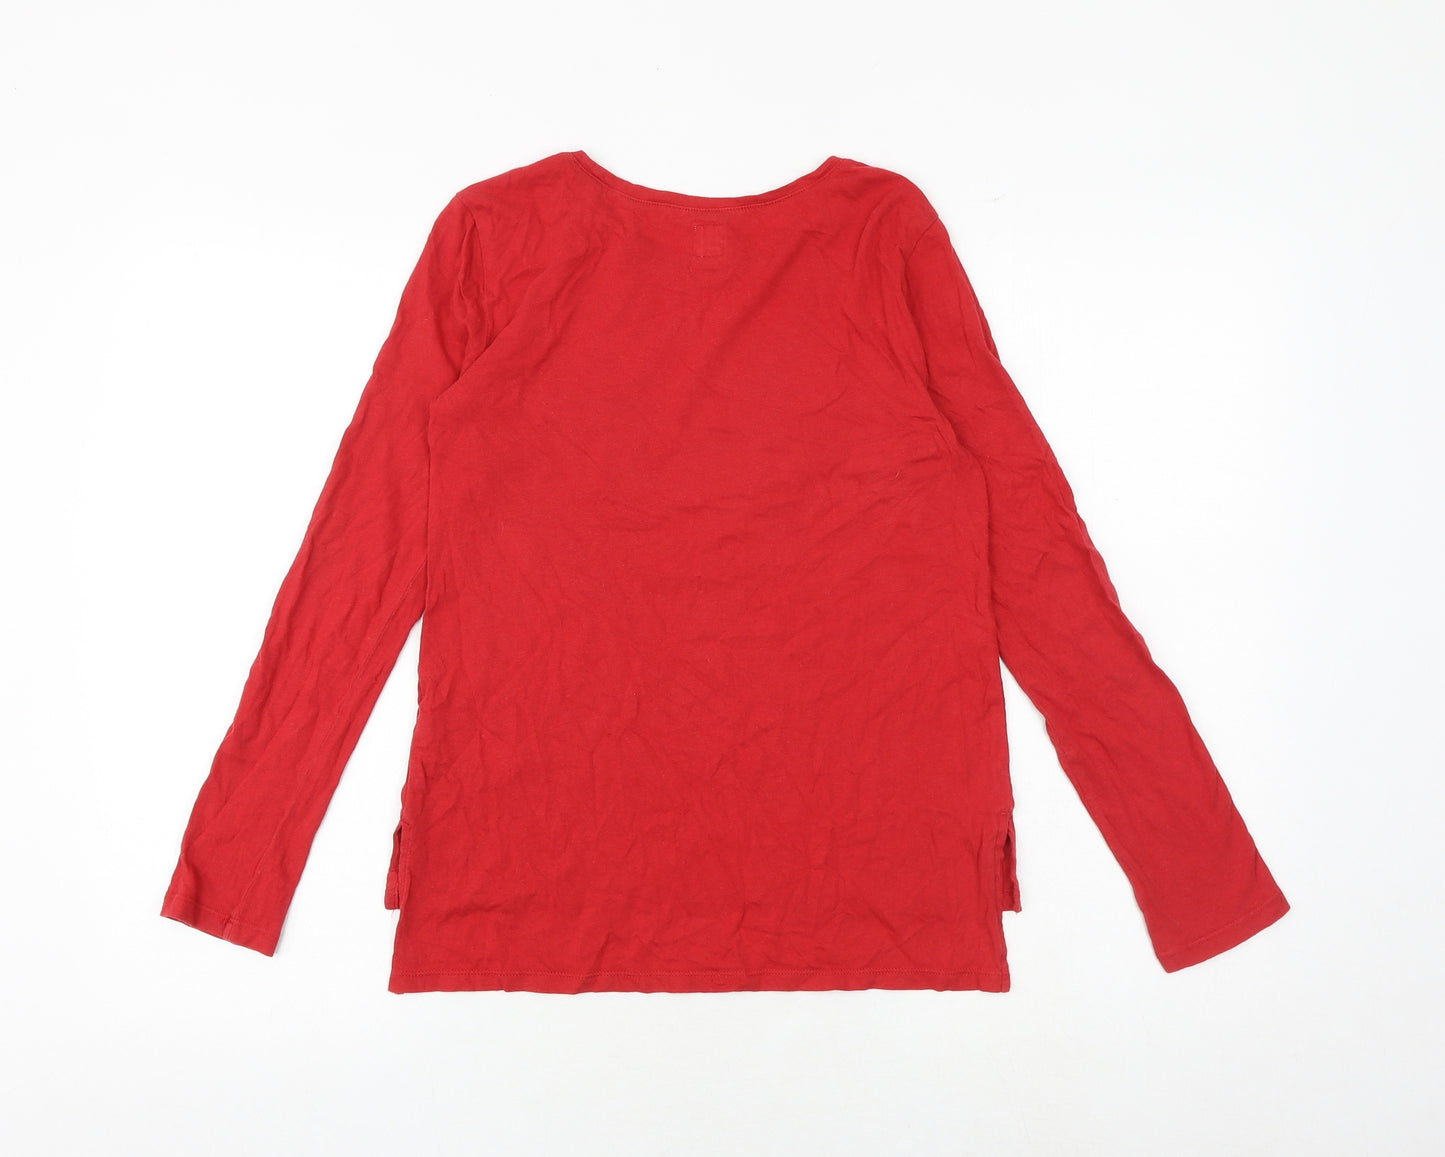 Gap Girls Red 100% Cotton Basic T-Shirt Size 12-13 Years Round Neck Pullover